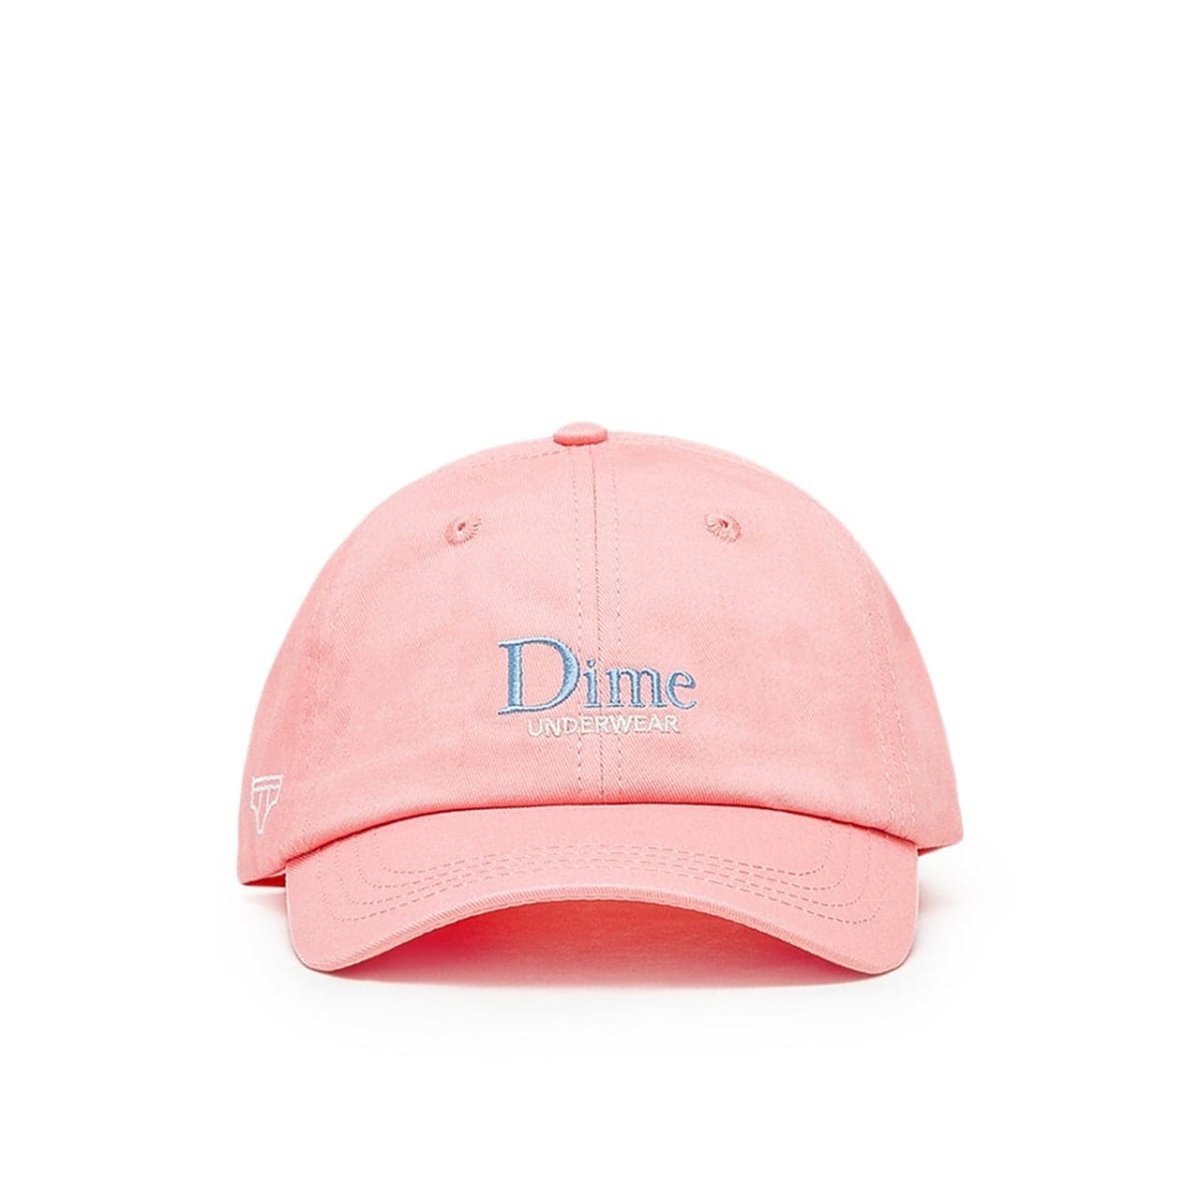 Dime Underwear Cap (Pink)  - Allike Store